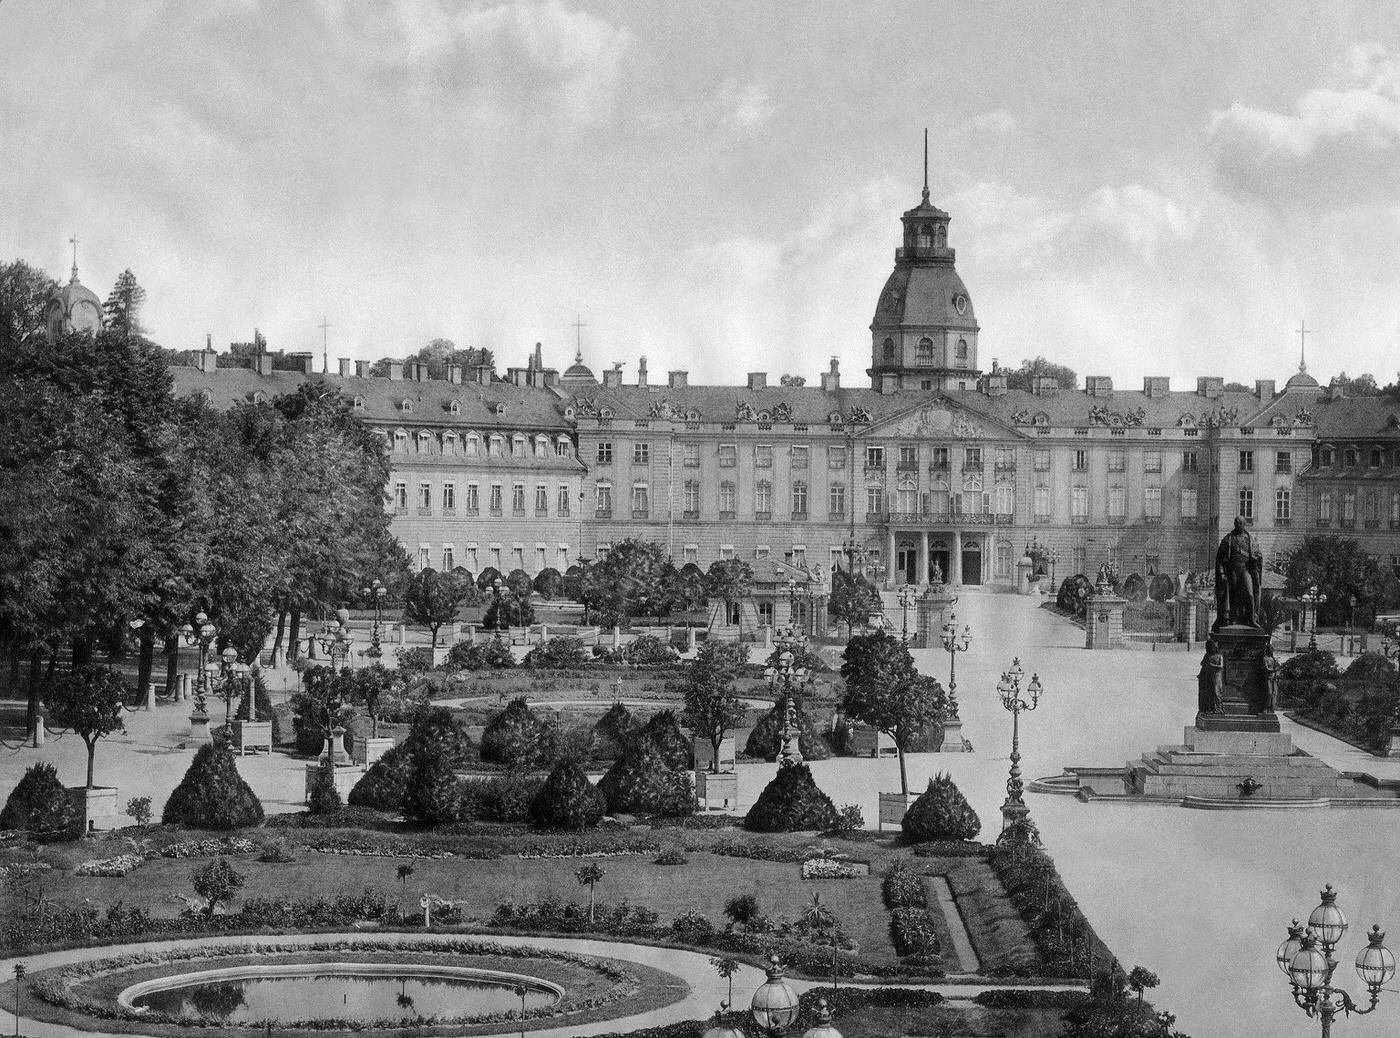 German Empire, Baden Grossherzogtum, Karlsruhe Castle with Palace Garden, 1890